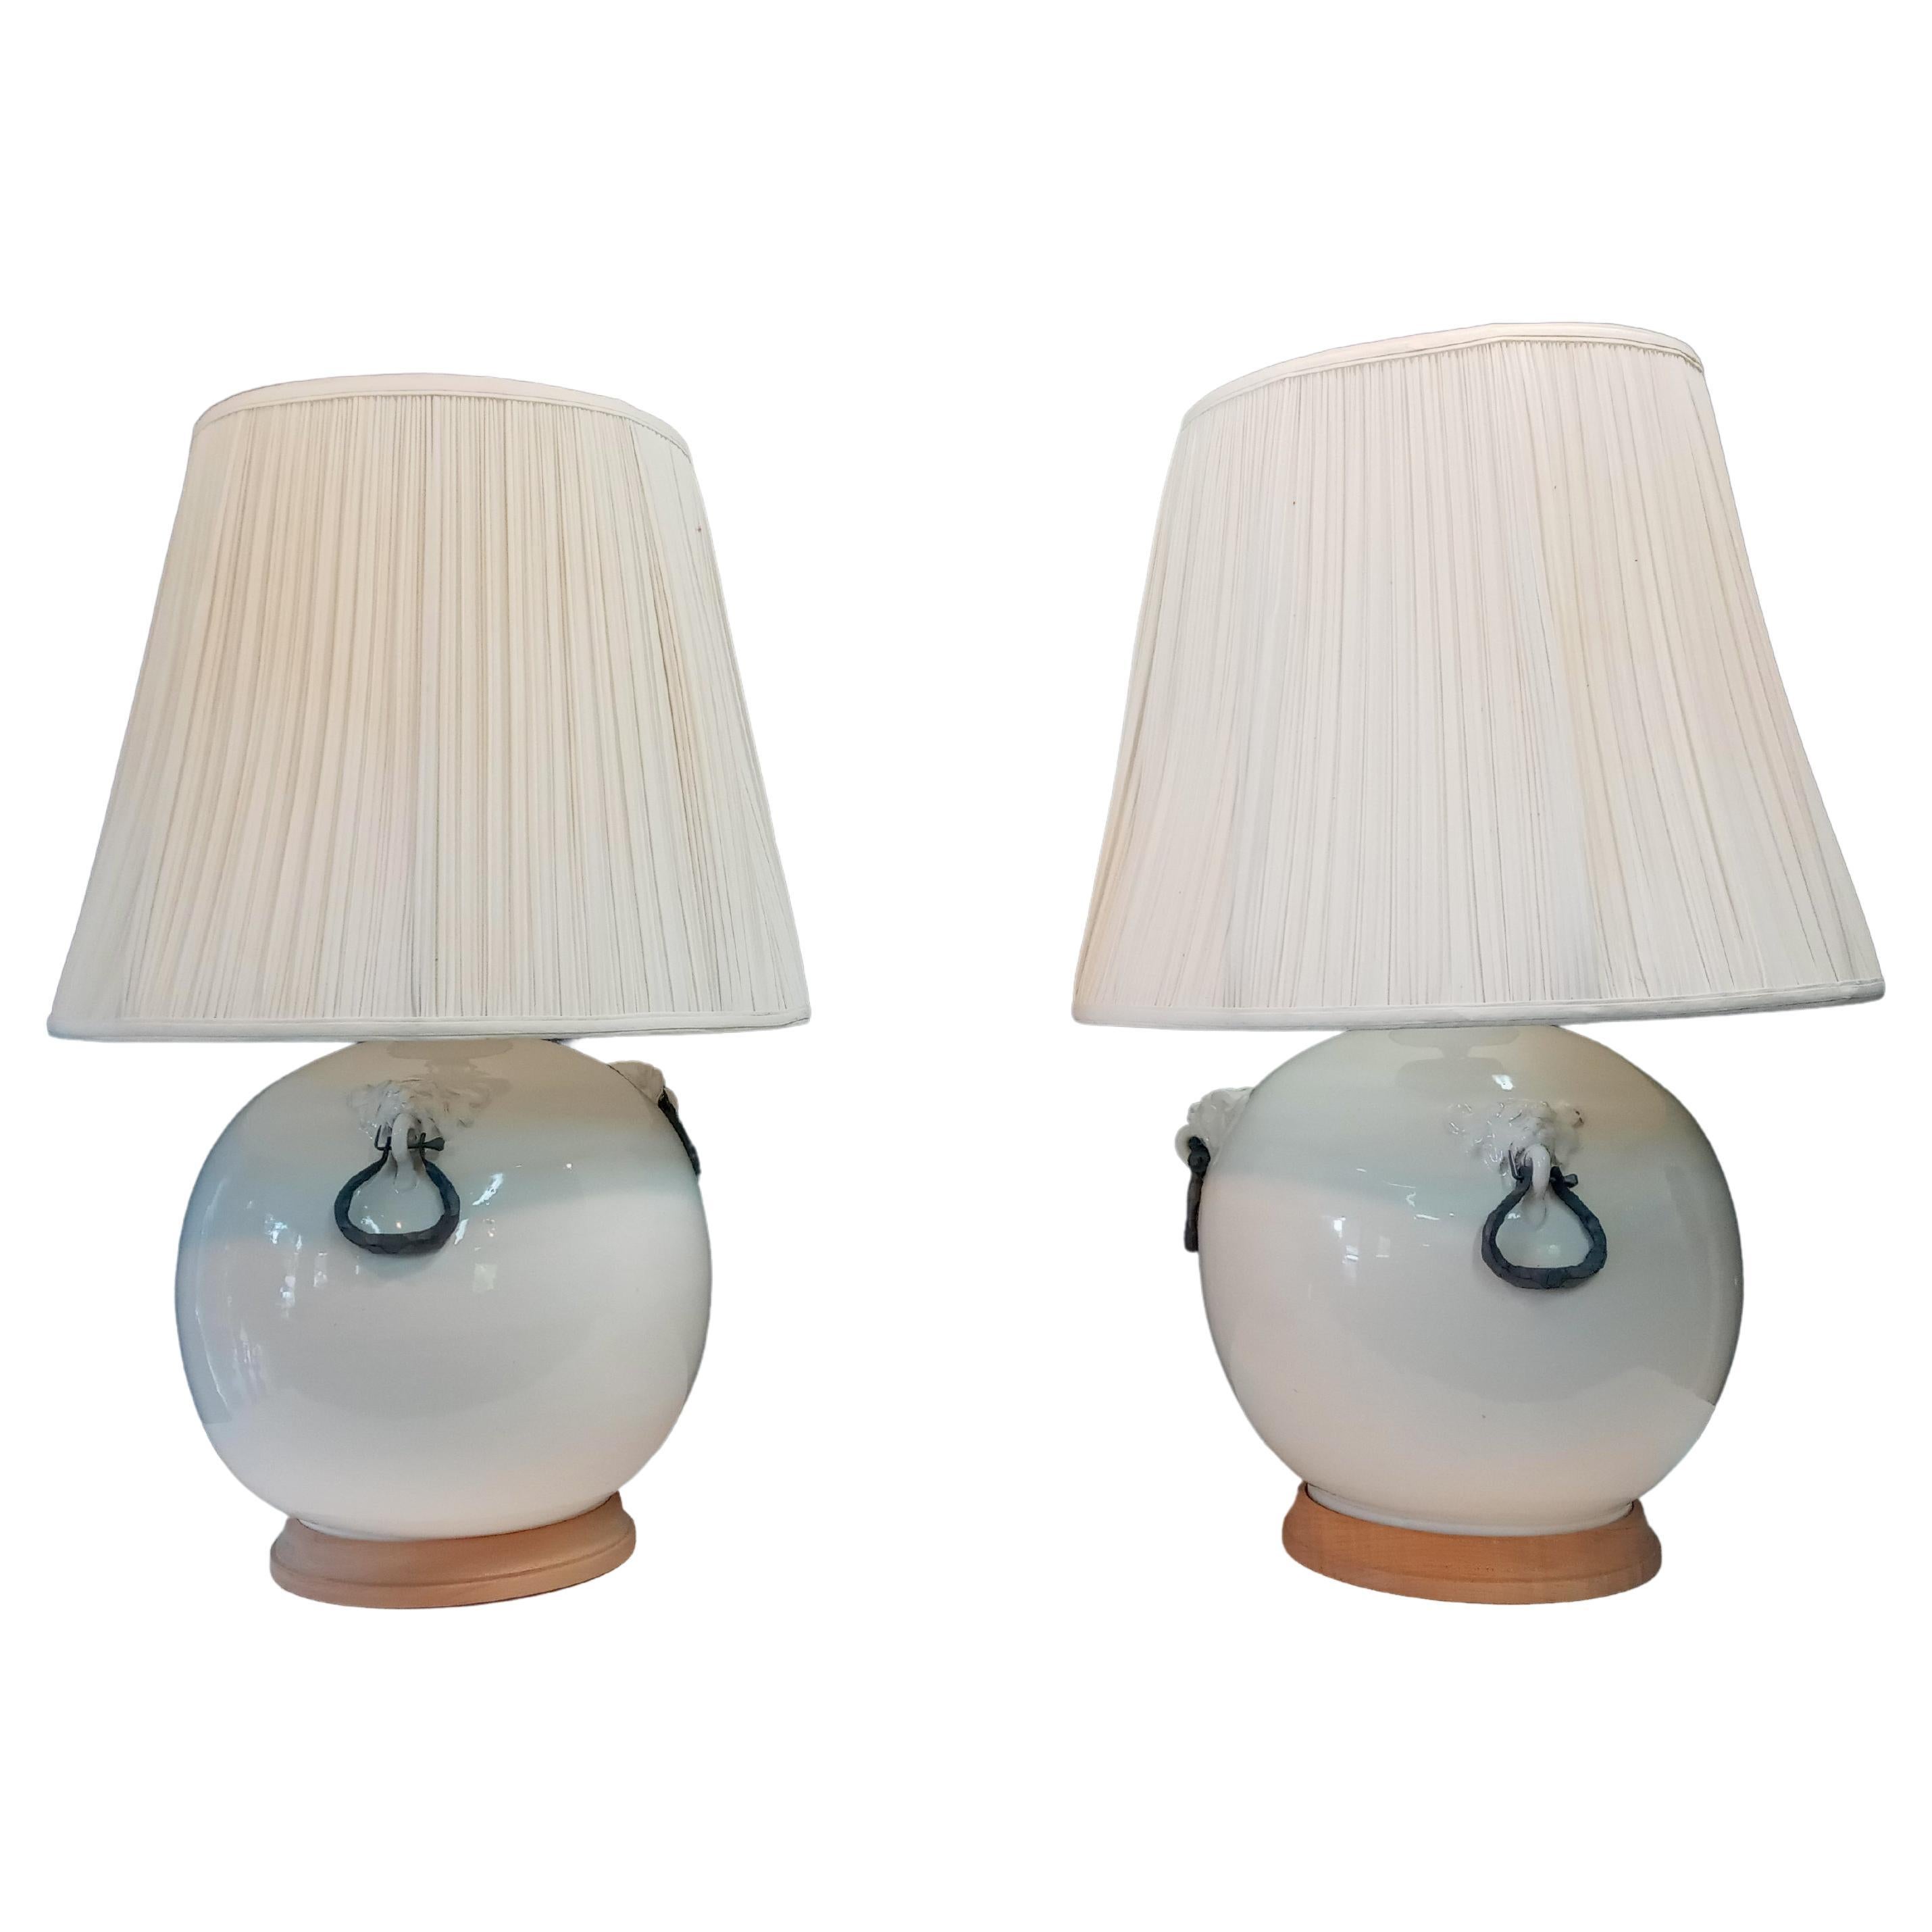 Pair of Massive White Glazed Ceramic Italian Table Lamps Mid-Century Modern Era For Sale